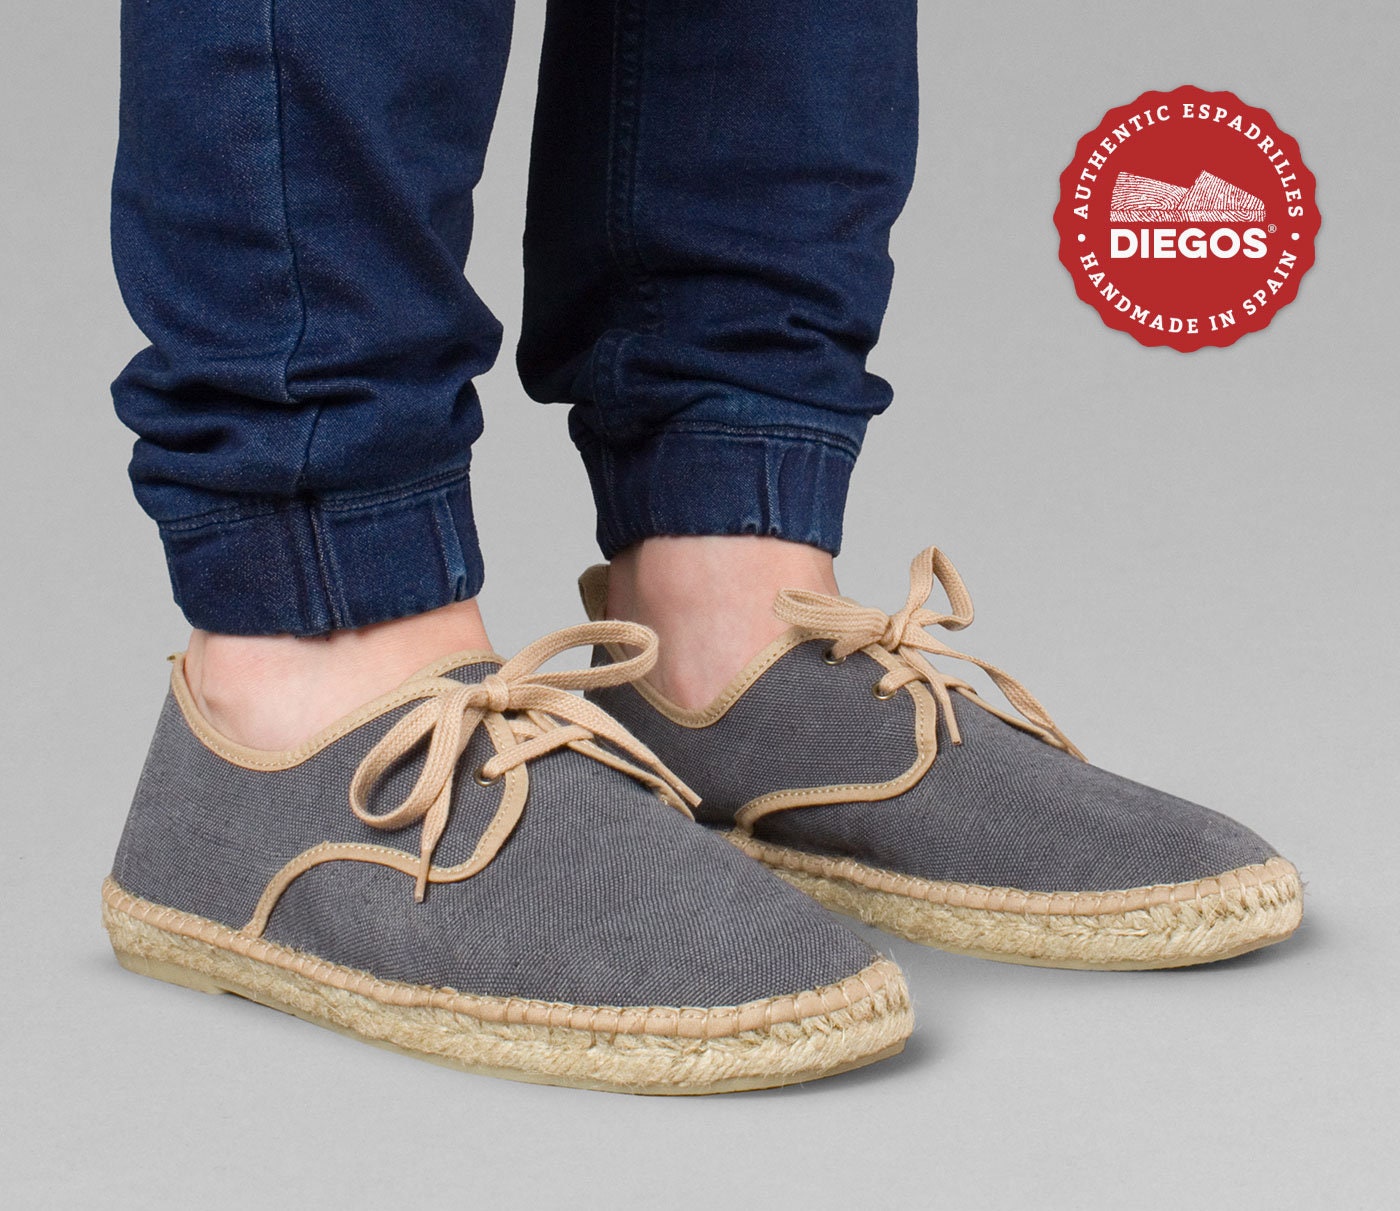 Spanish Espadrilles Shoes for Men in the Dark Gray Color - Sweden